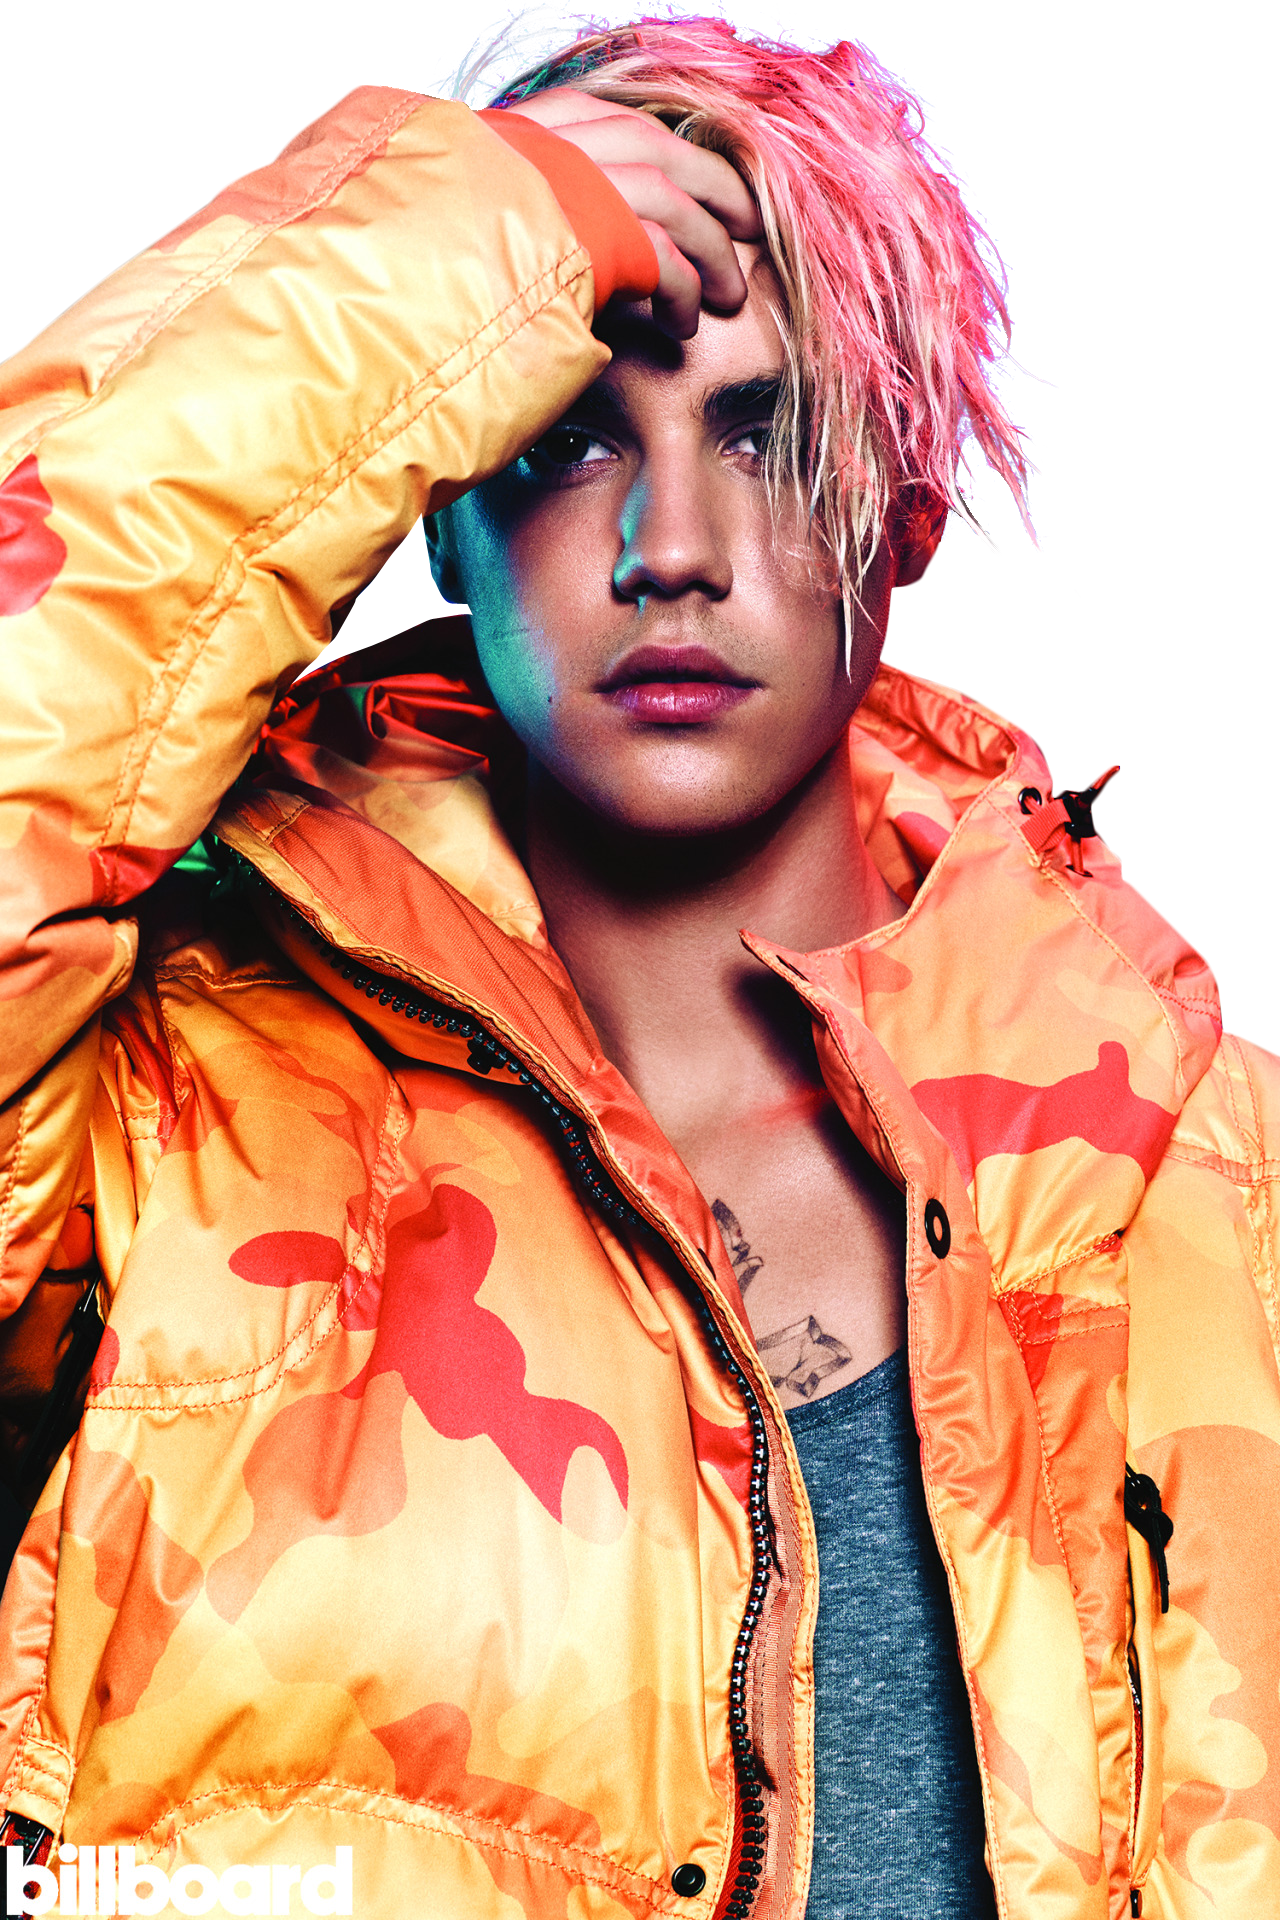 Justin Bieber Blue Red Light PNG Image - PurePNG | Free transparent CC0